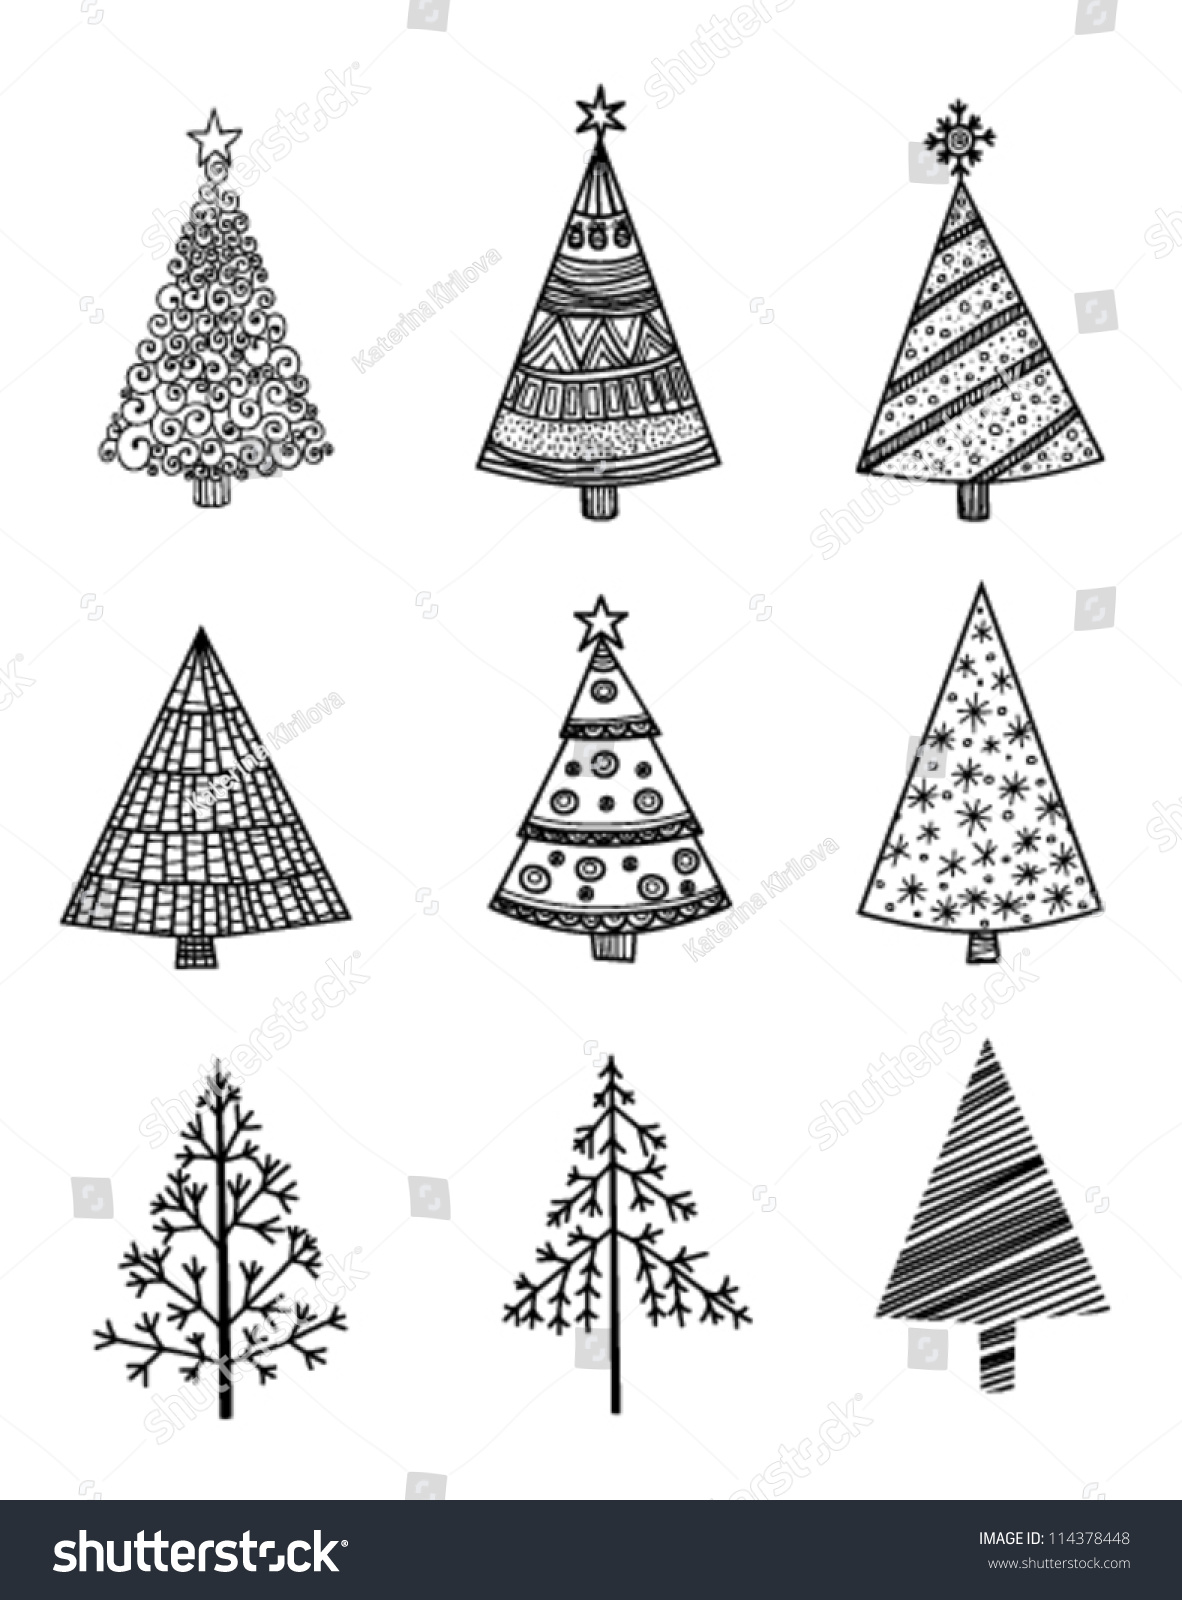 Set Of 9 Hand Drawn Christmas Trees Stock Vector Illustration 114378448 ...